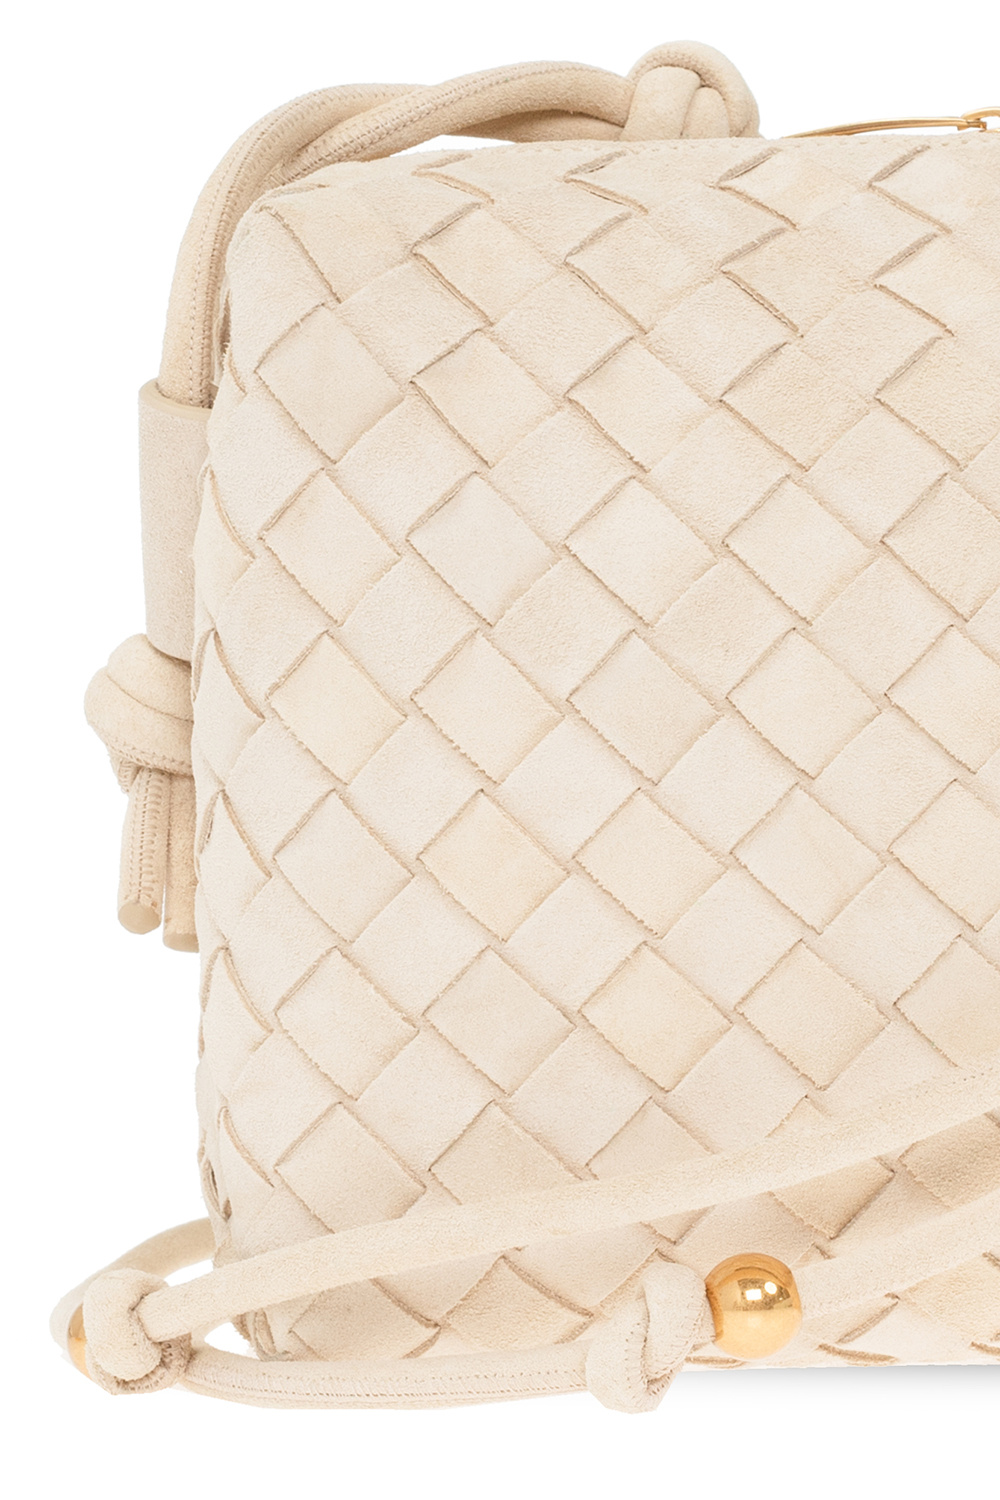 IetpShops GB - bottega veneta bv fold leather shoulder bag - 'Loop